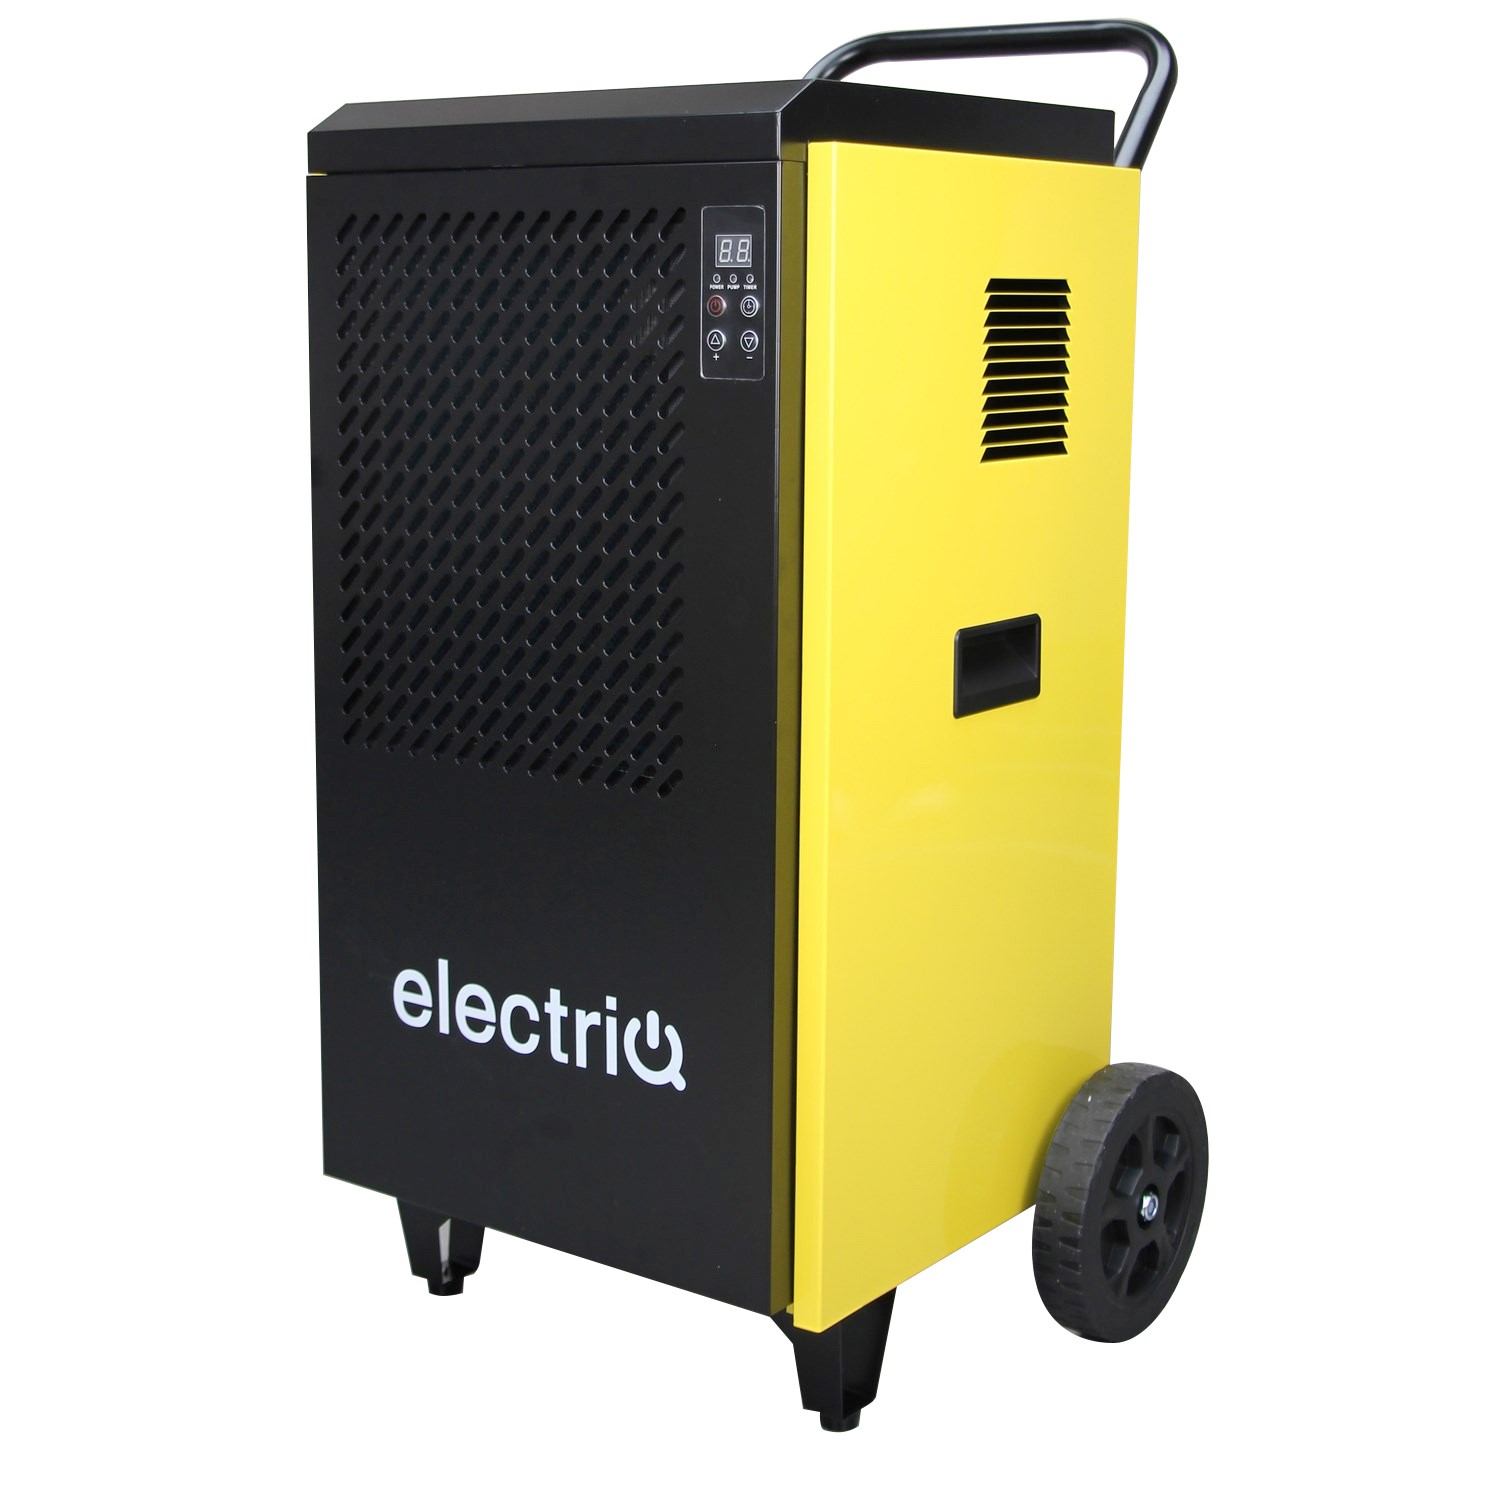 electriQ 70 Litre Commercial Dehumidifier with Digital Humidistat Timer and Uplift Pump